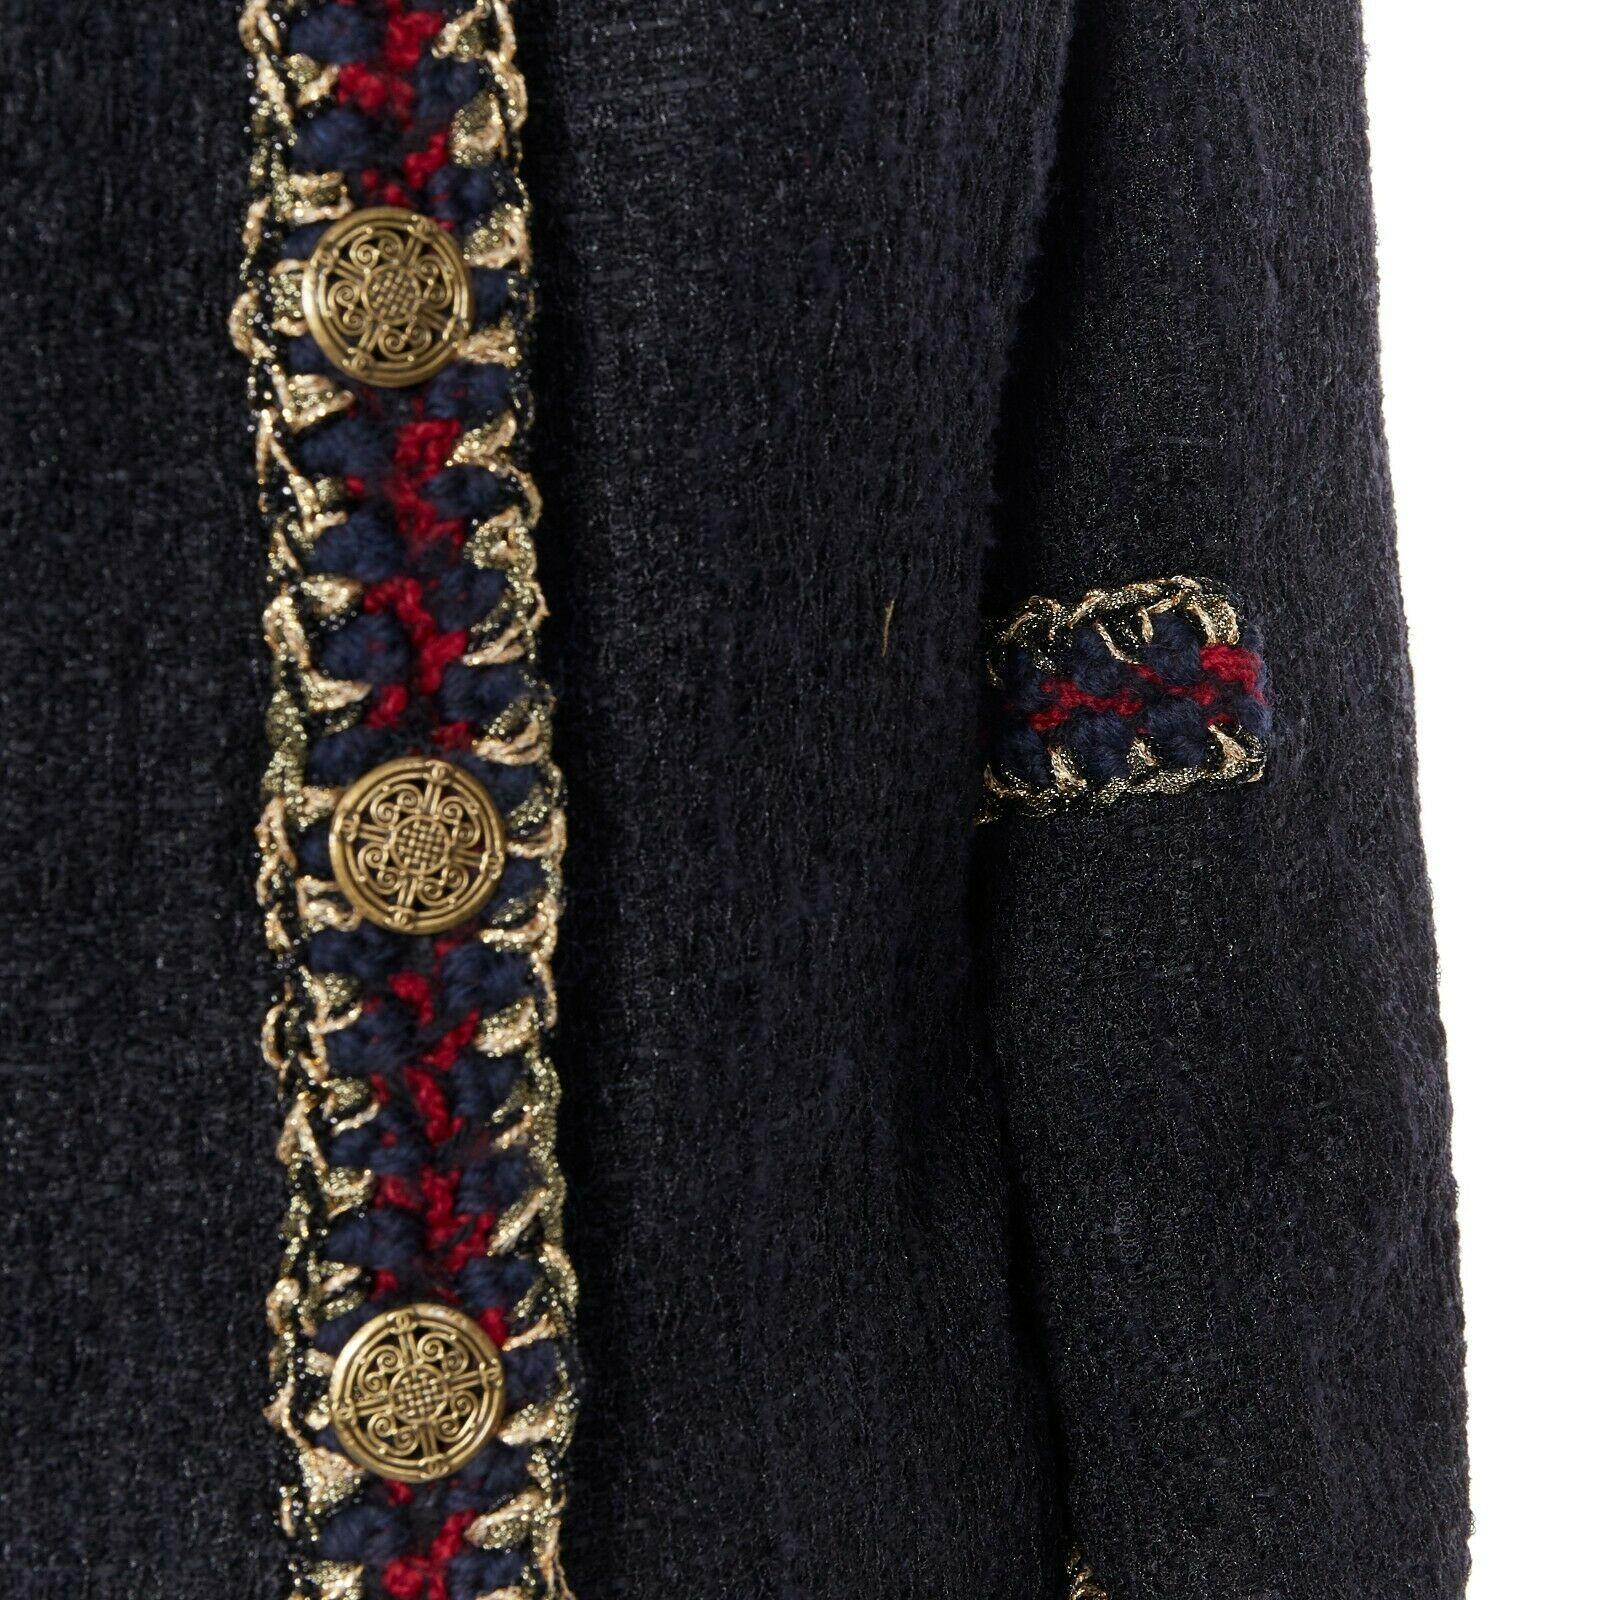 runway CHANEL 10A Paris-Shanghai black lacquered tweed crochet trim jacket FR46
Brand: CHANEL
Designer: Karl Lagerfeld
Collection: 10A 'Paris-Shanghai' Metier D'art
Model Name / Style: Tweed jacket
Material: Nylon
Color: Black
Pattern: